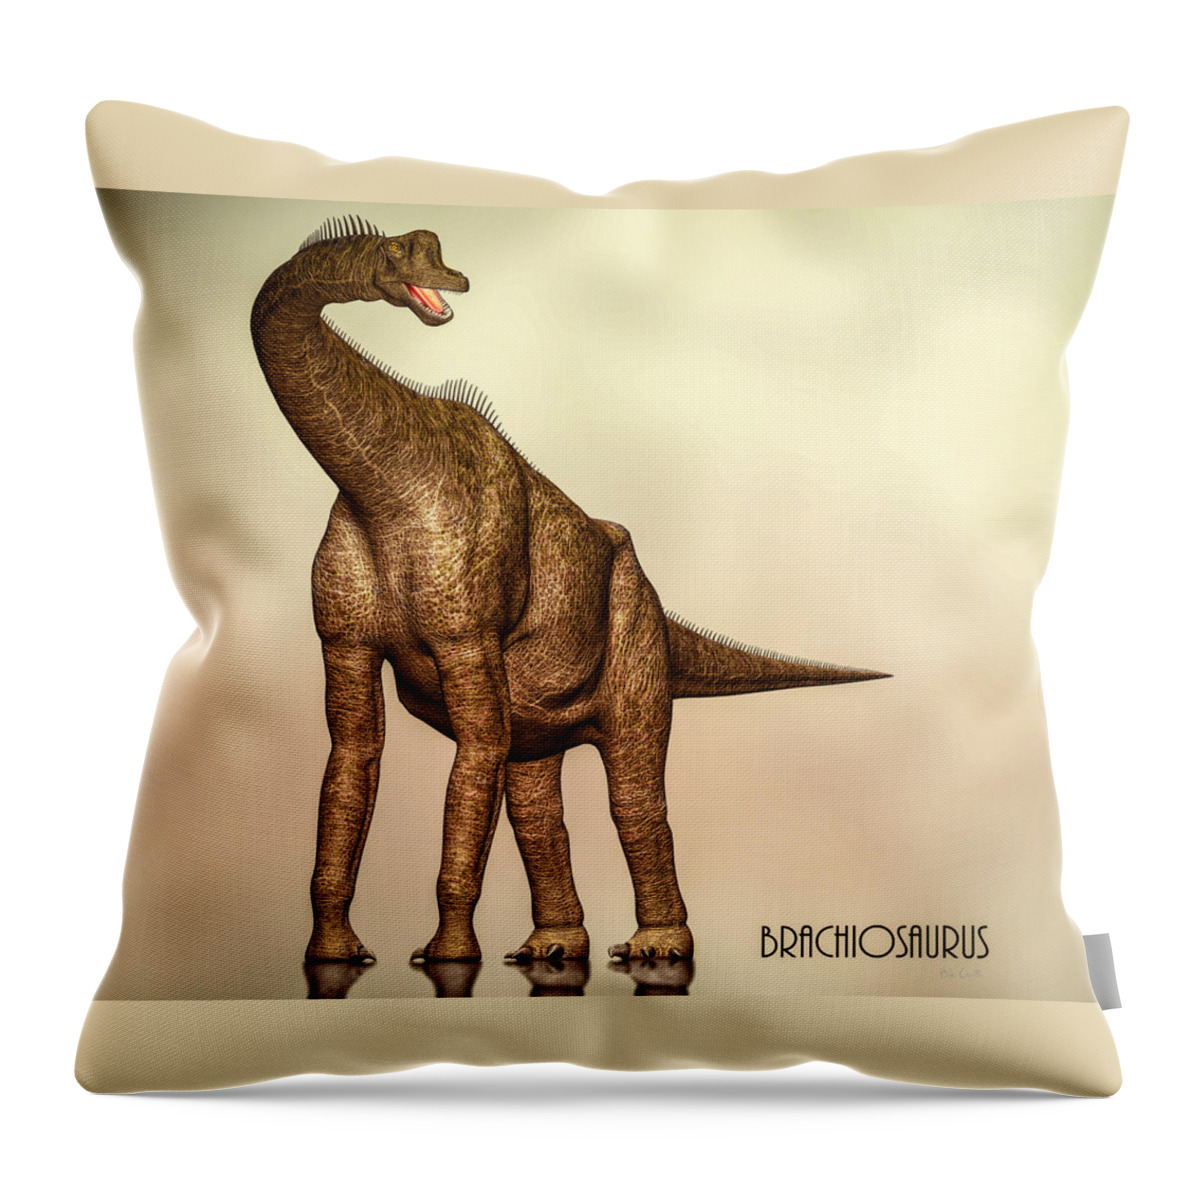 Jurassic Throw Pillow featuring the digital art Brachiosaurus Dinosaur by Bob Orsillo